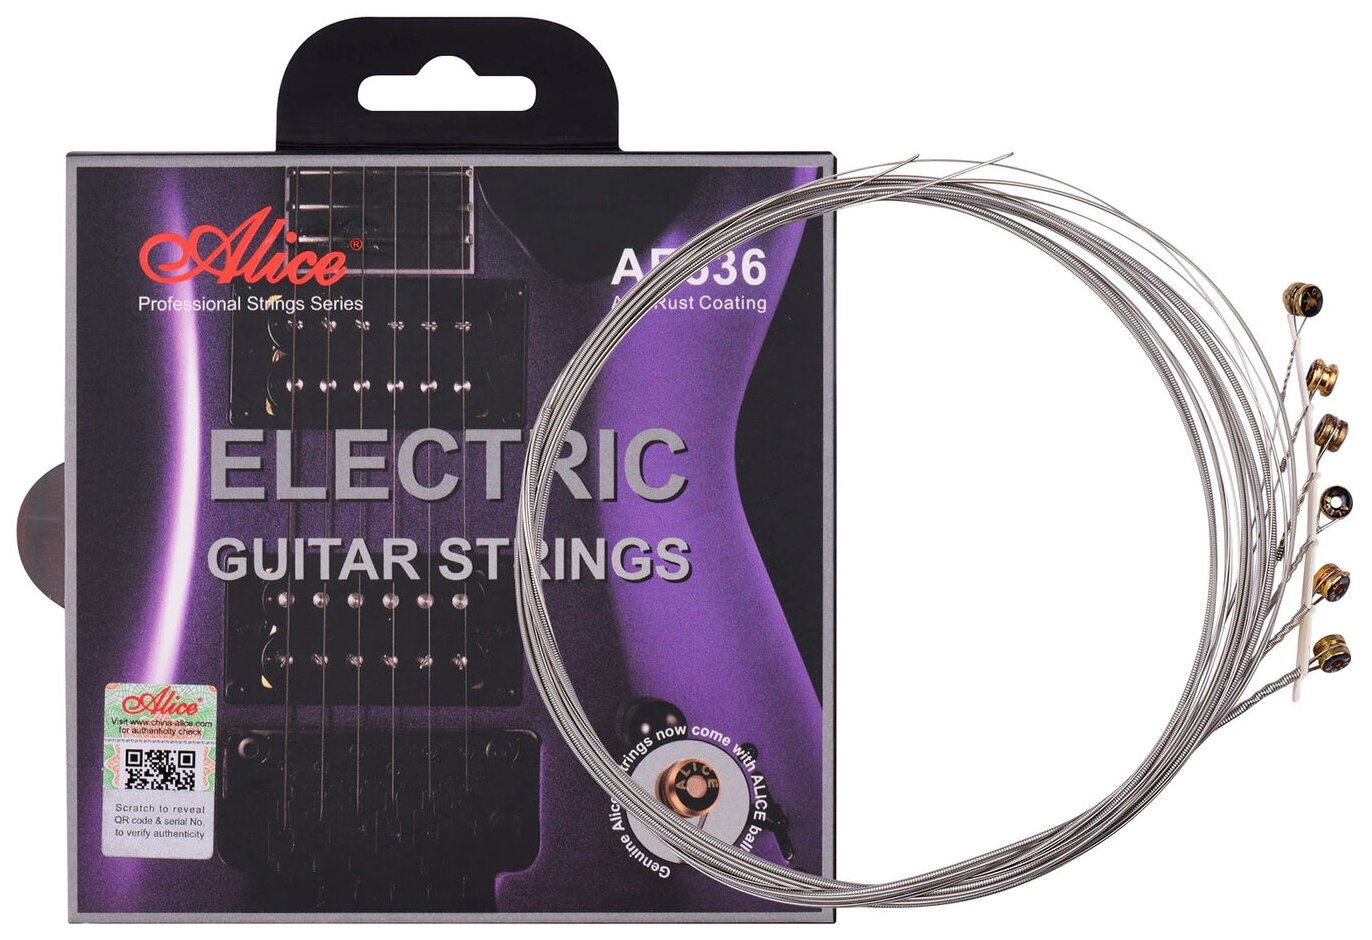 Струны для гитары комплект струн для электрогитары сплав железа Light 10-46 Alice AE536-L